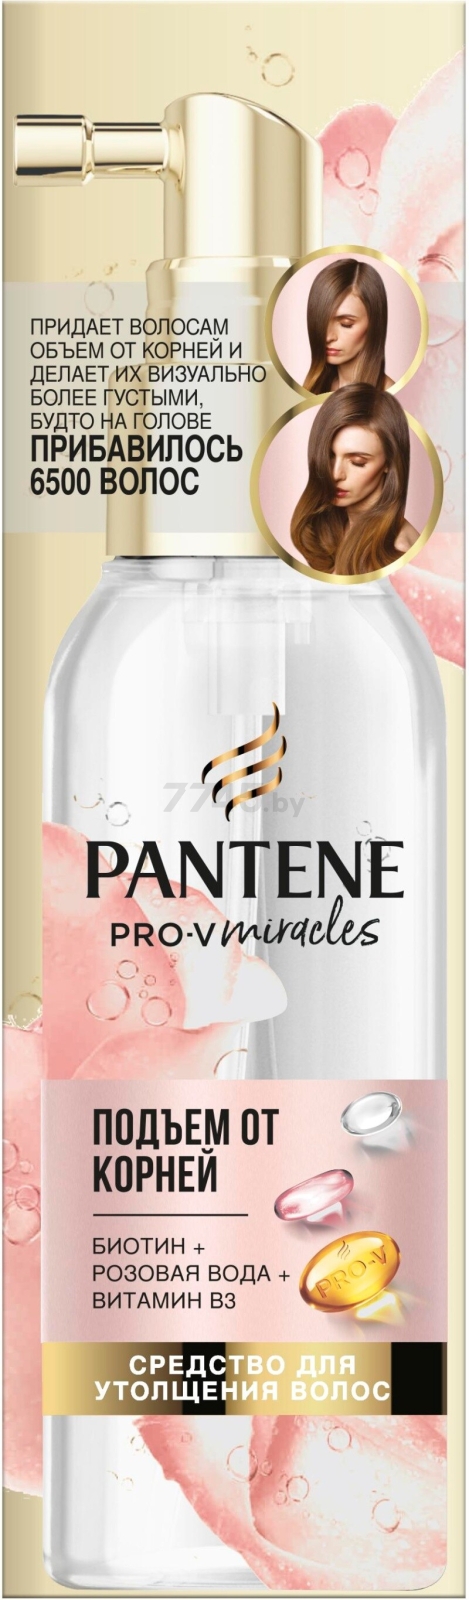 Средство для утолщения волос PANTENE Pro-V Rose Miracles Подъем от корней 100 мл (8001841884110)